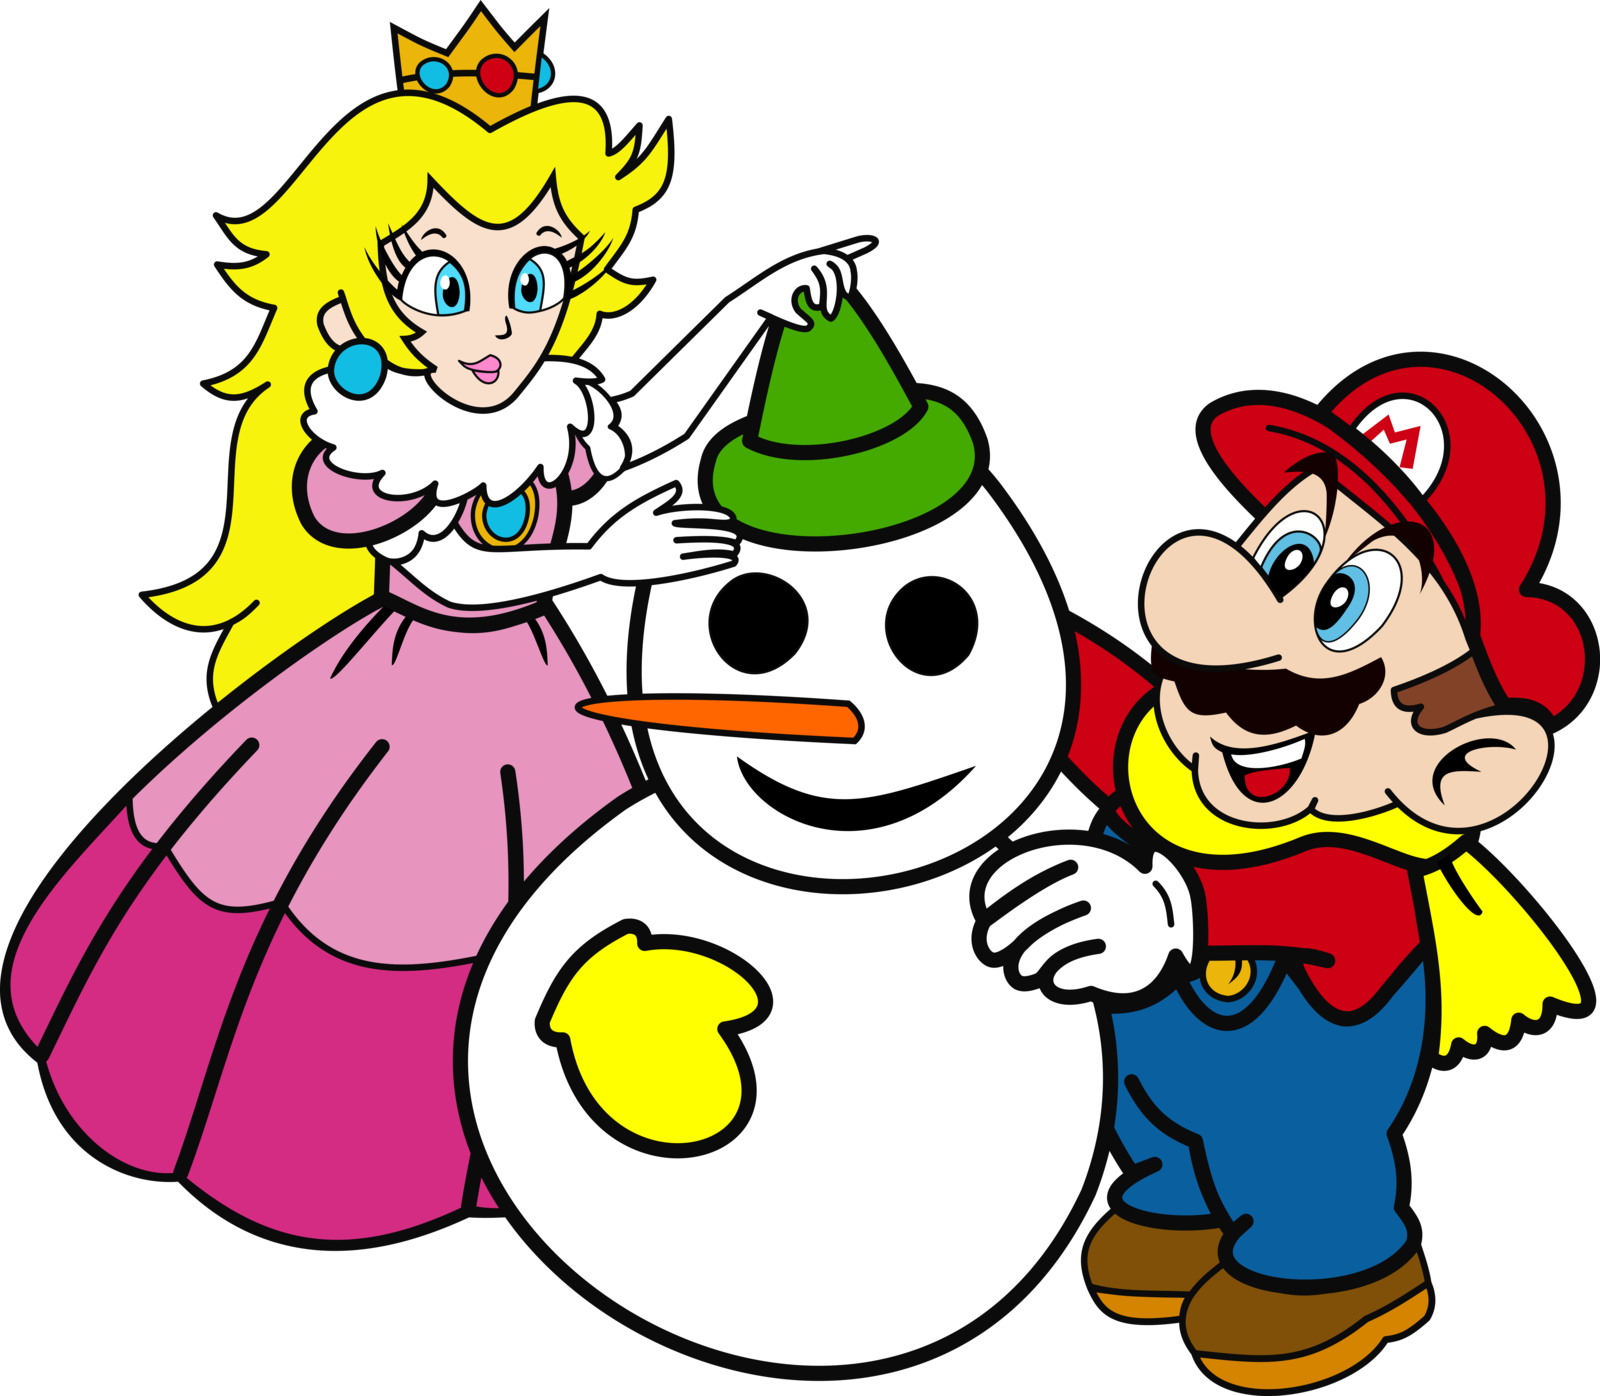 Atomicmillennial Mario And Peach Are Building A Snowman - Digital Art (1600x1396)